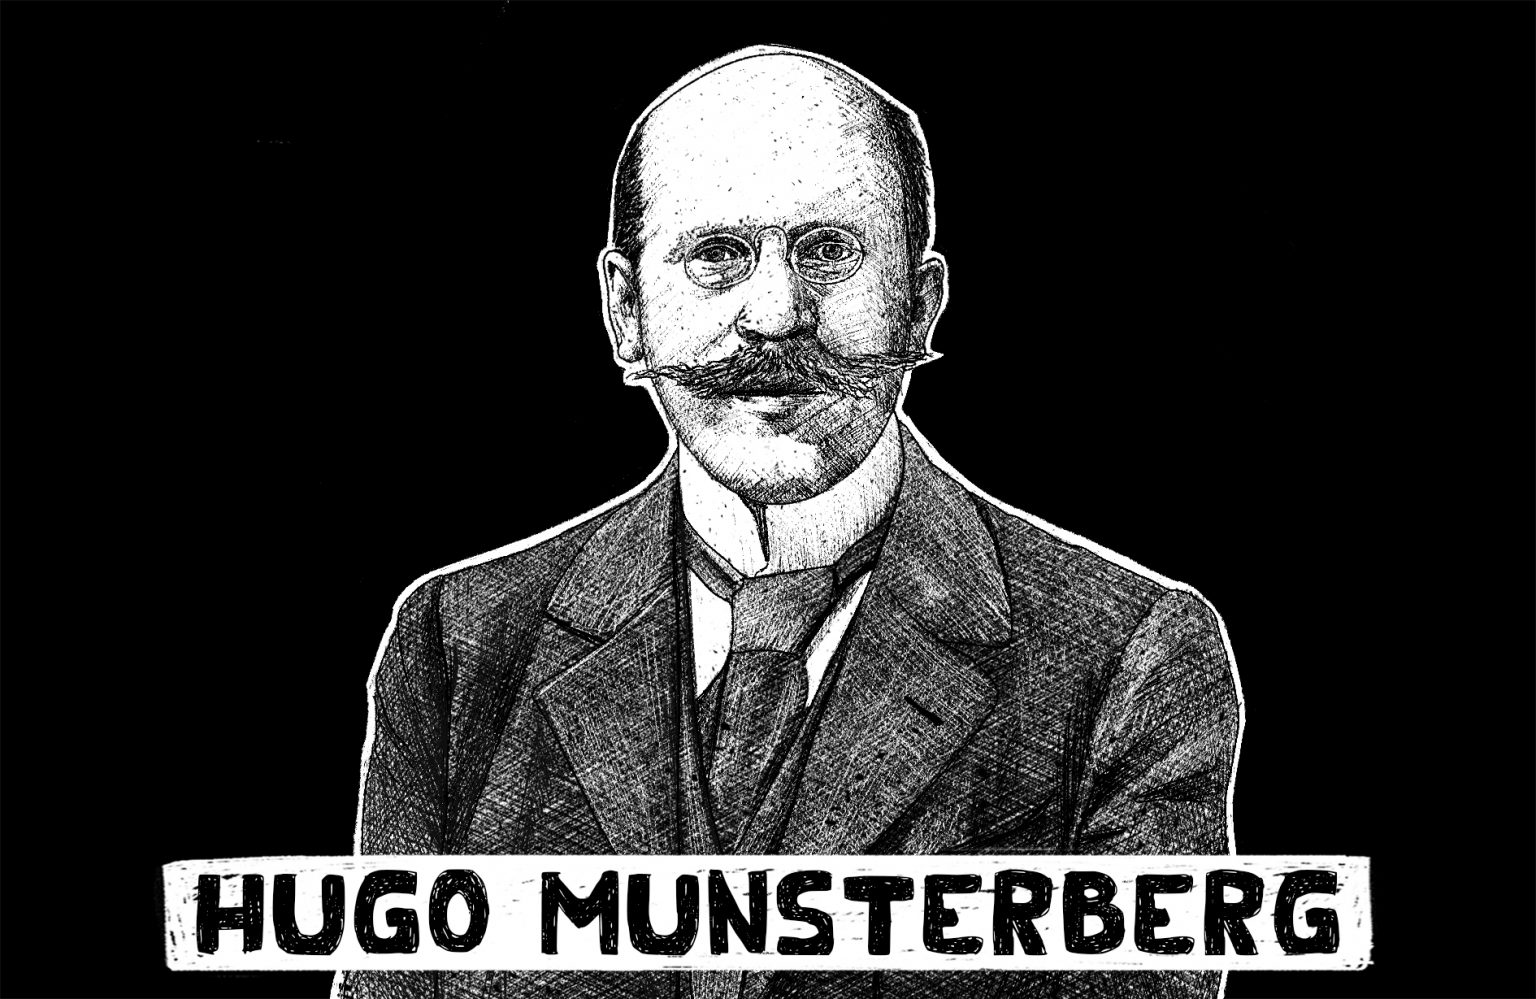 Hugo Munsterberg Biography Contributions To Psychology